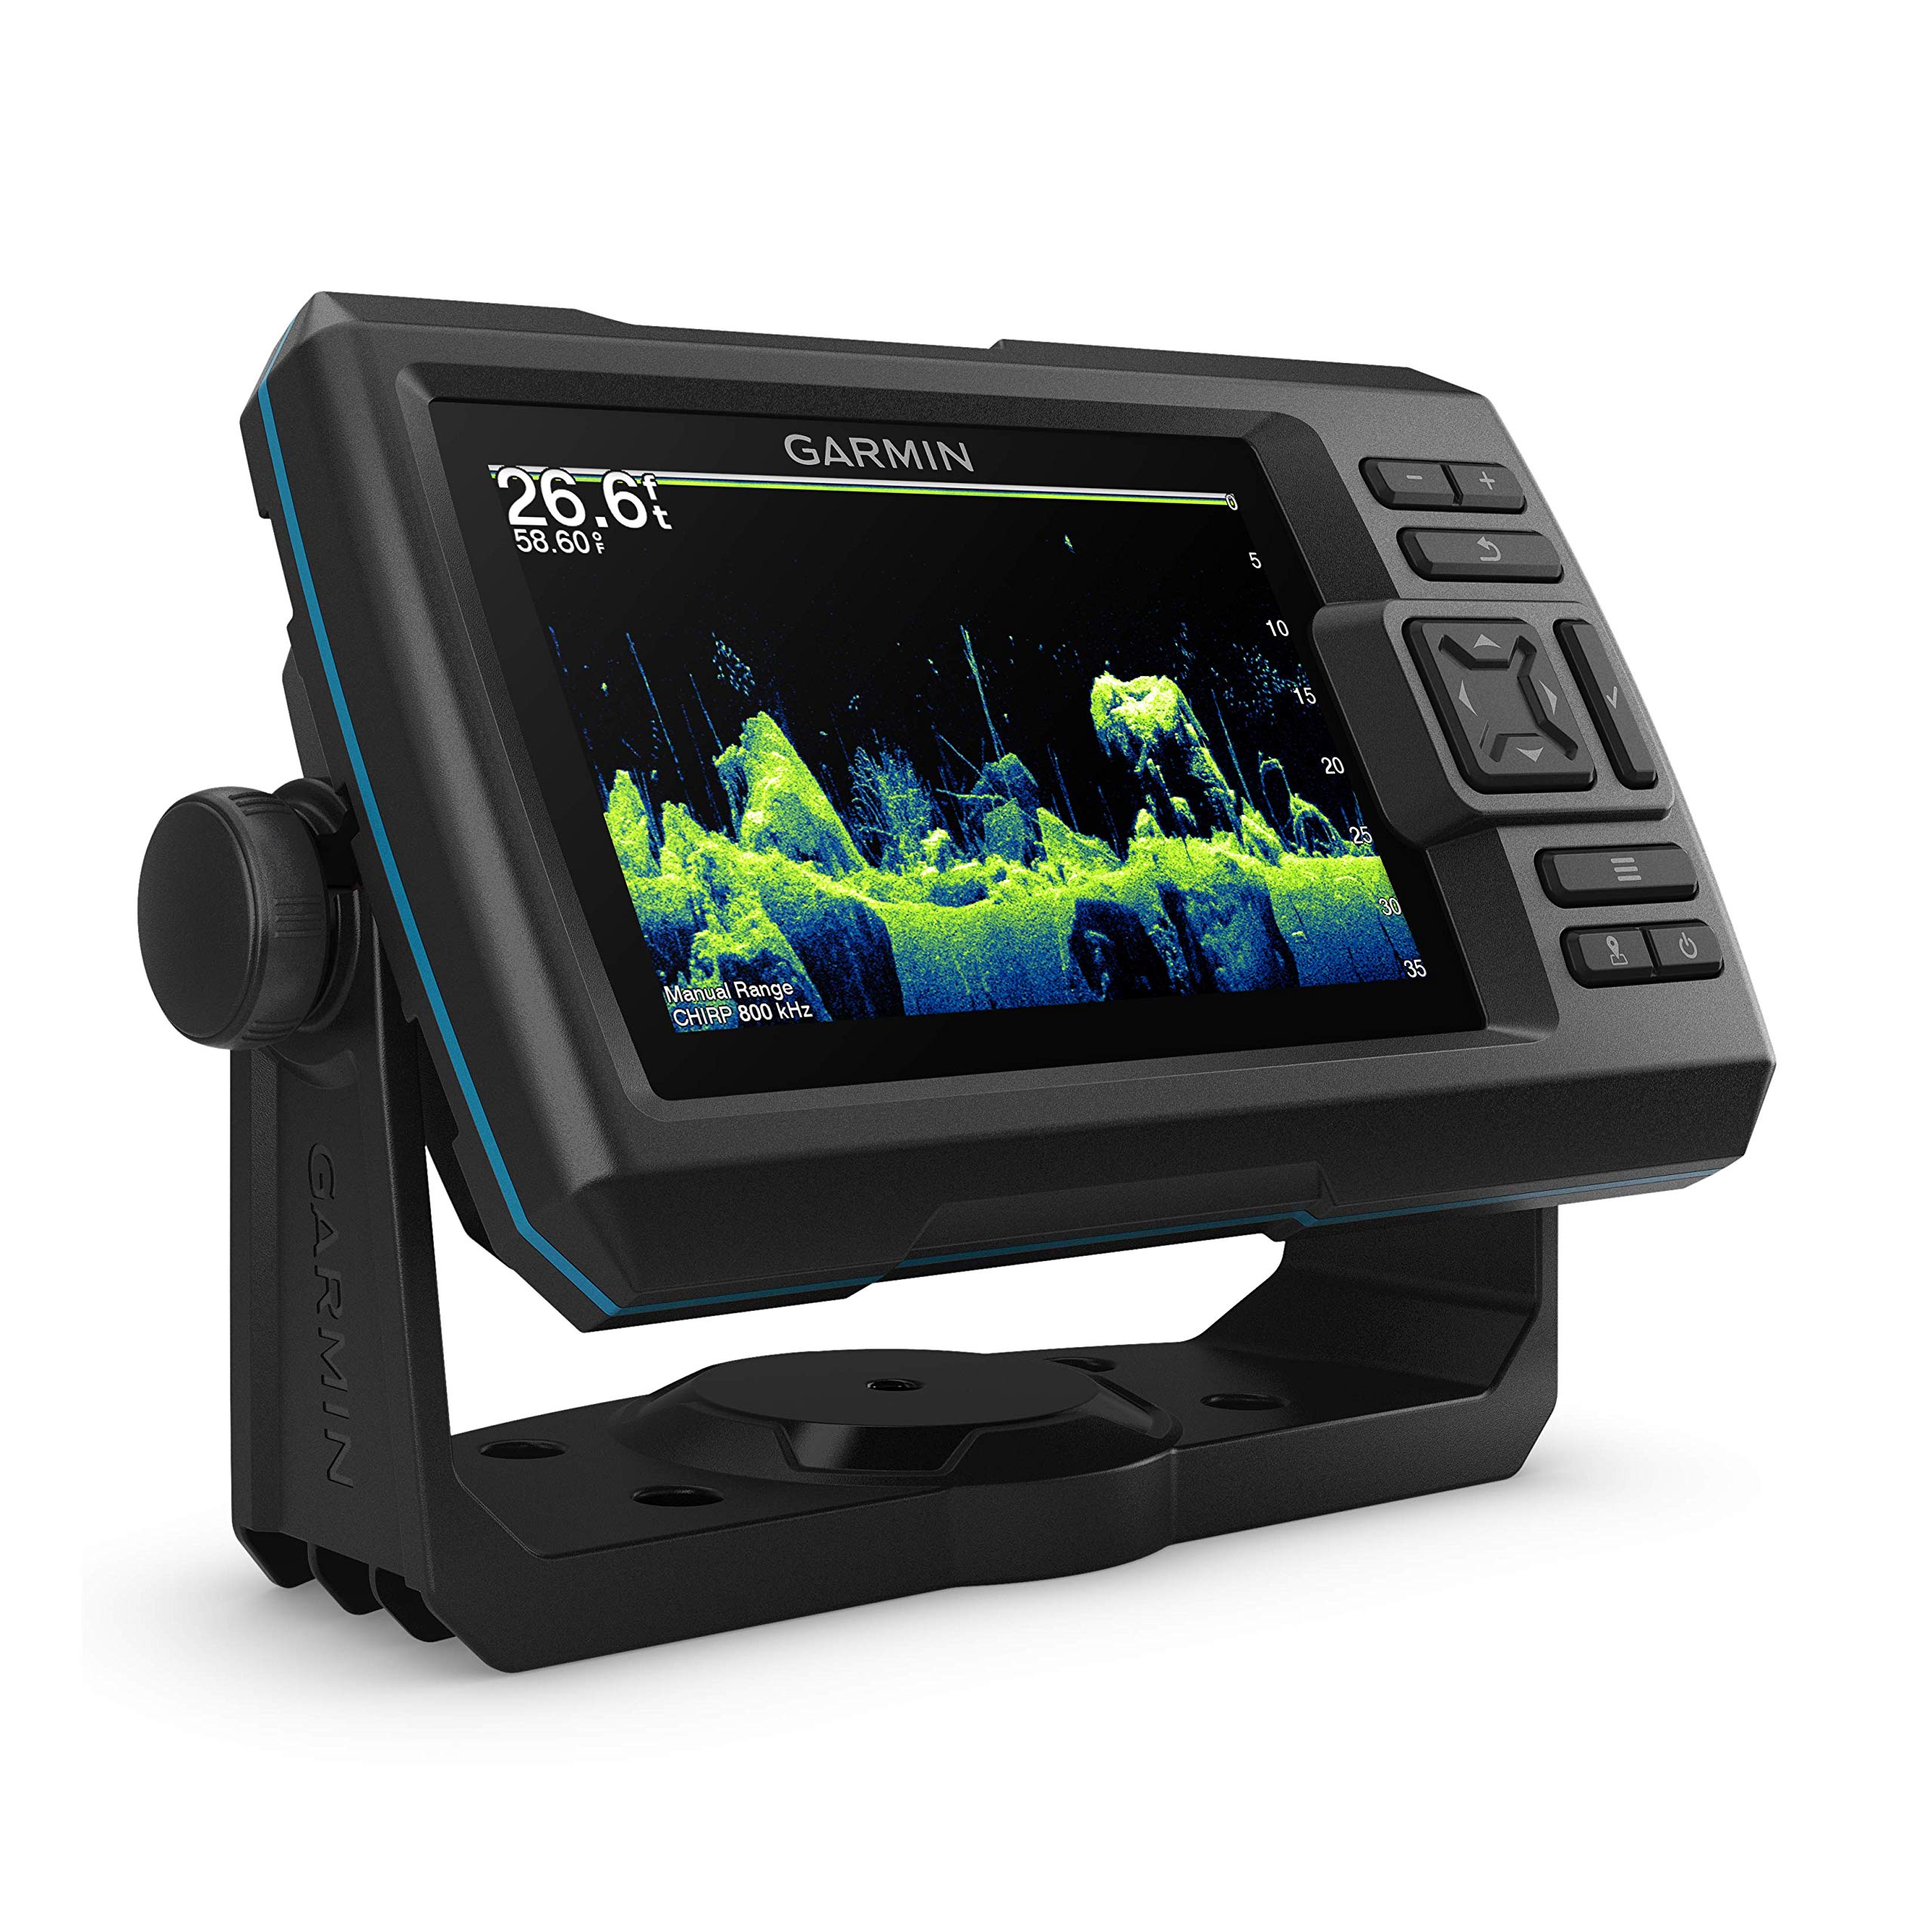 Garmin 010-02551-00 STRIKER Vivid 5cv Fishfinder With GT20 Transducer and Protective Cover, 5-inch Color Display, 800x480 Pixels Resolution, Vivid Scanning Sonar Color Palettes, High-sensitivity GPS